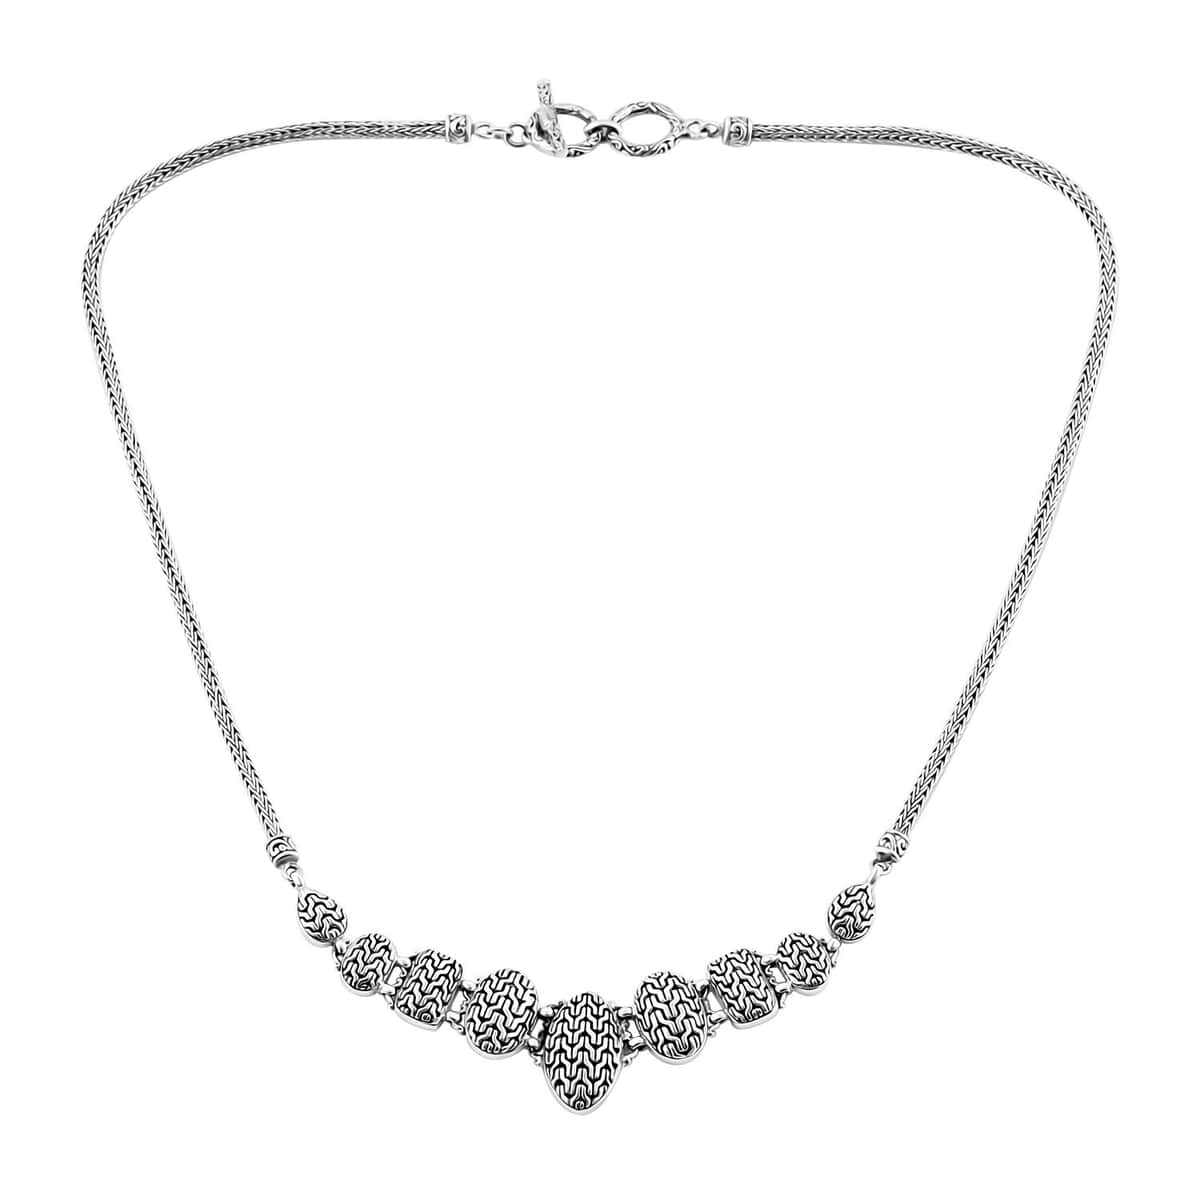 Bali Legacy Sterling Silver Tulang Naga Necklace 20-21.50 Inches 27.40 Grams image number 0